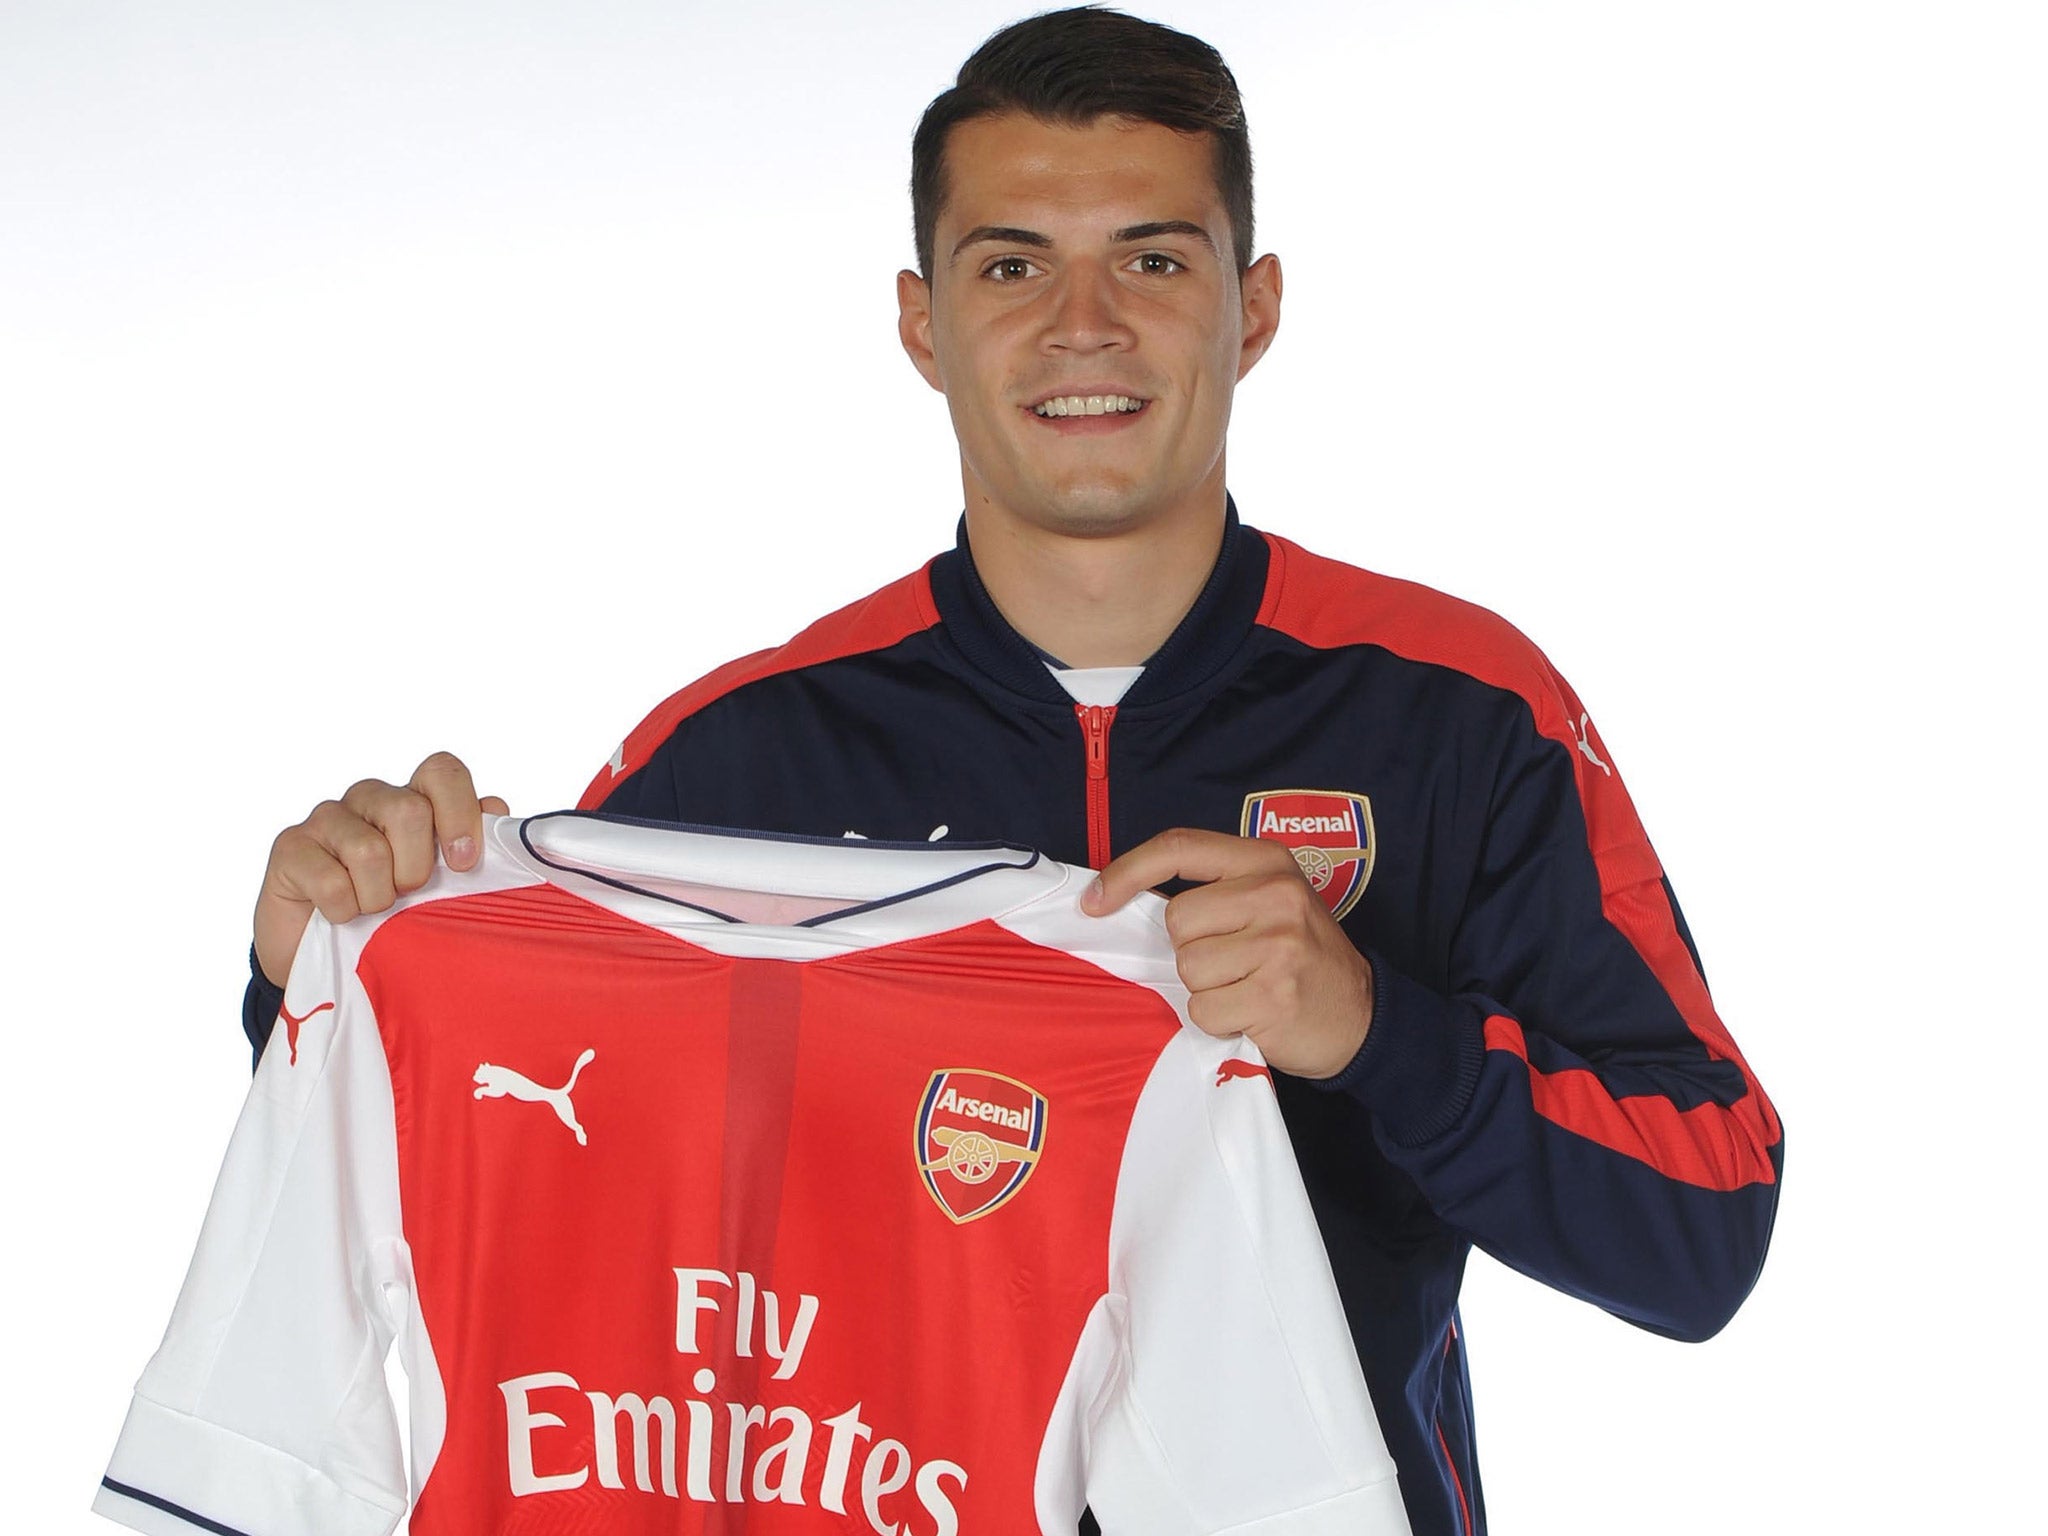 &#13;
Arsenal signed Granit Xhaka this summer &#13;